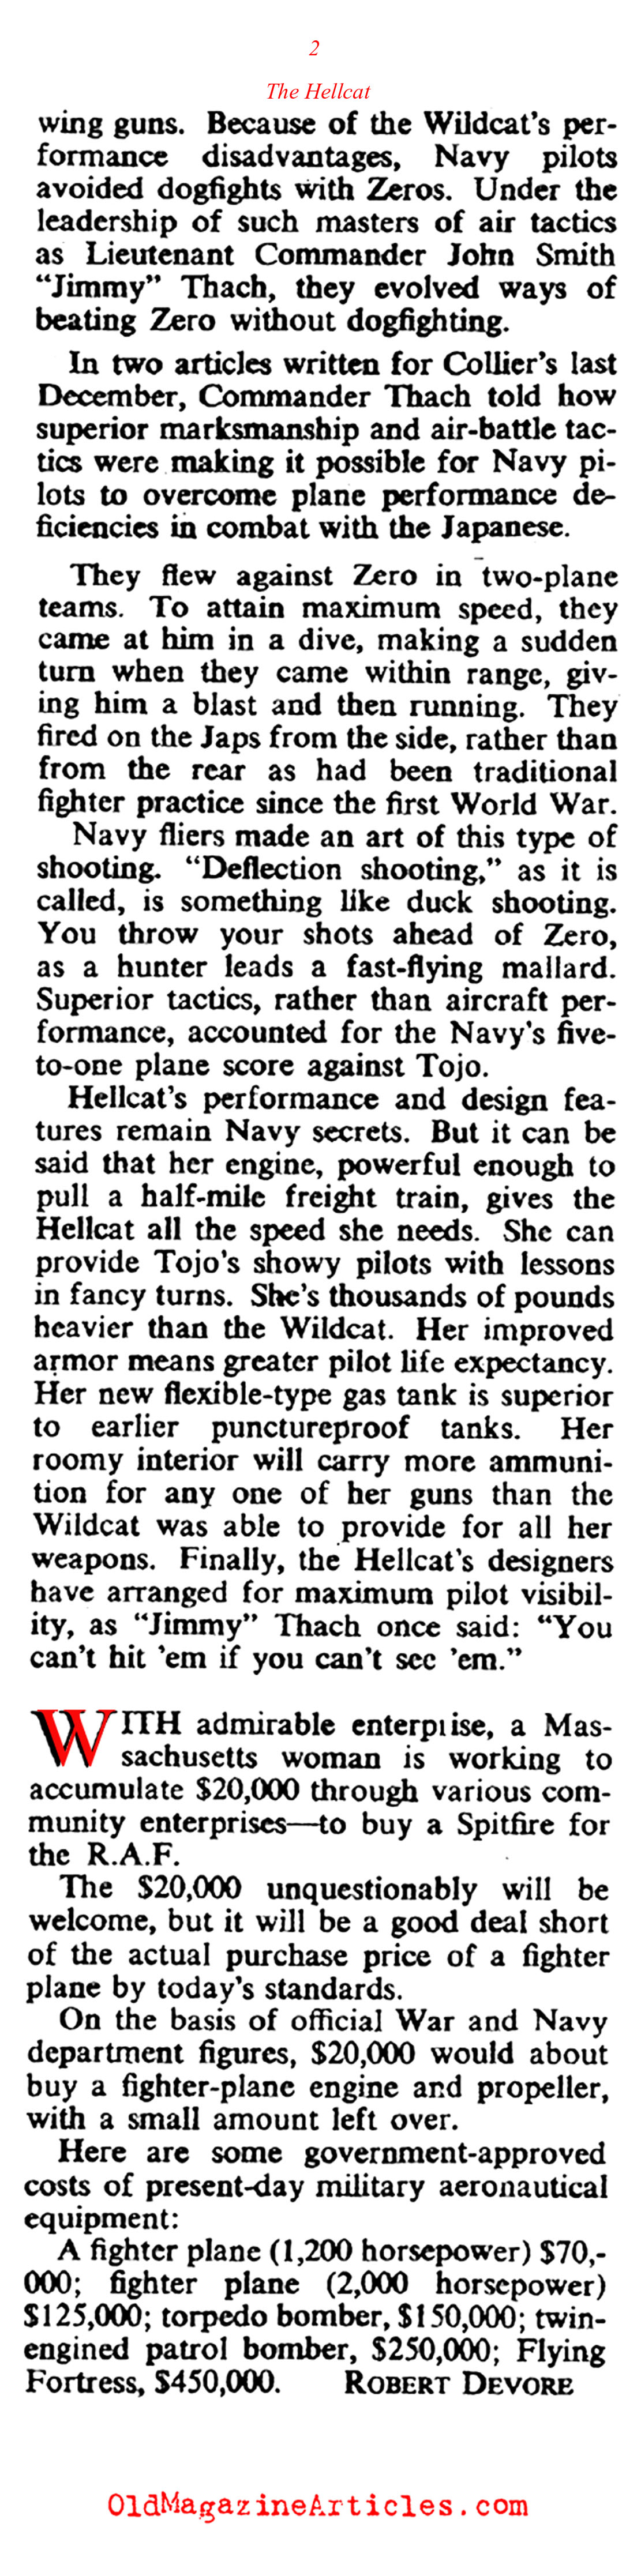 The Grumman Hellcat (Collier's Magazine, 1943)